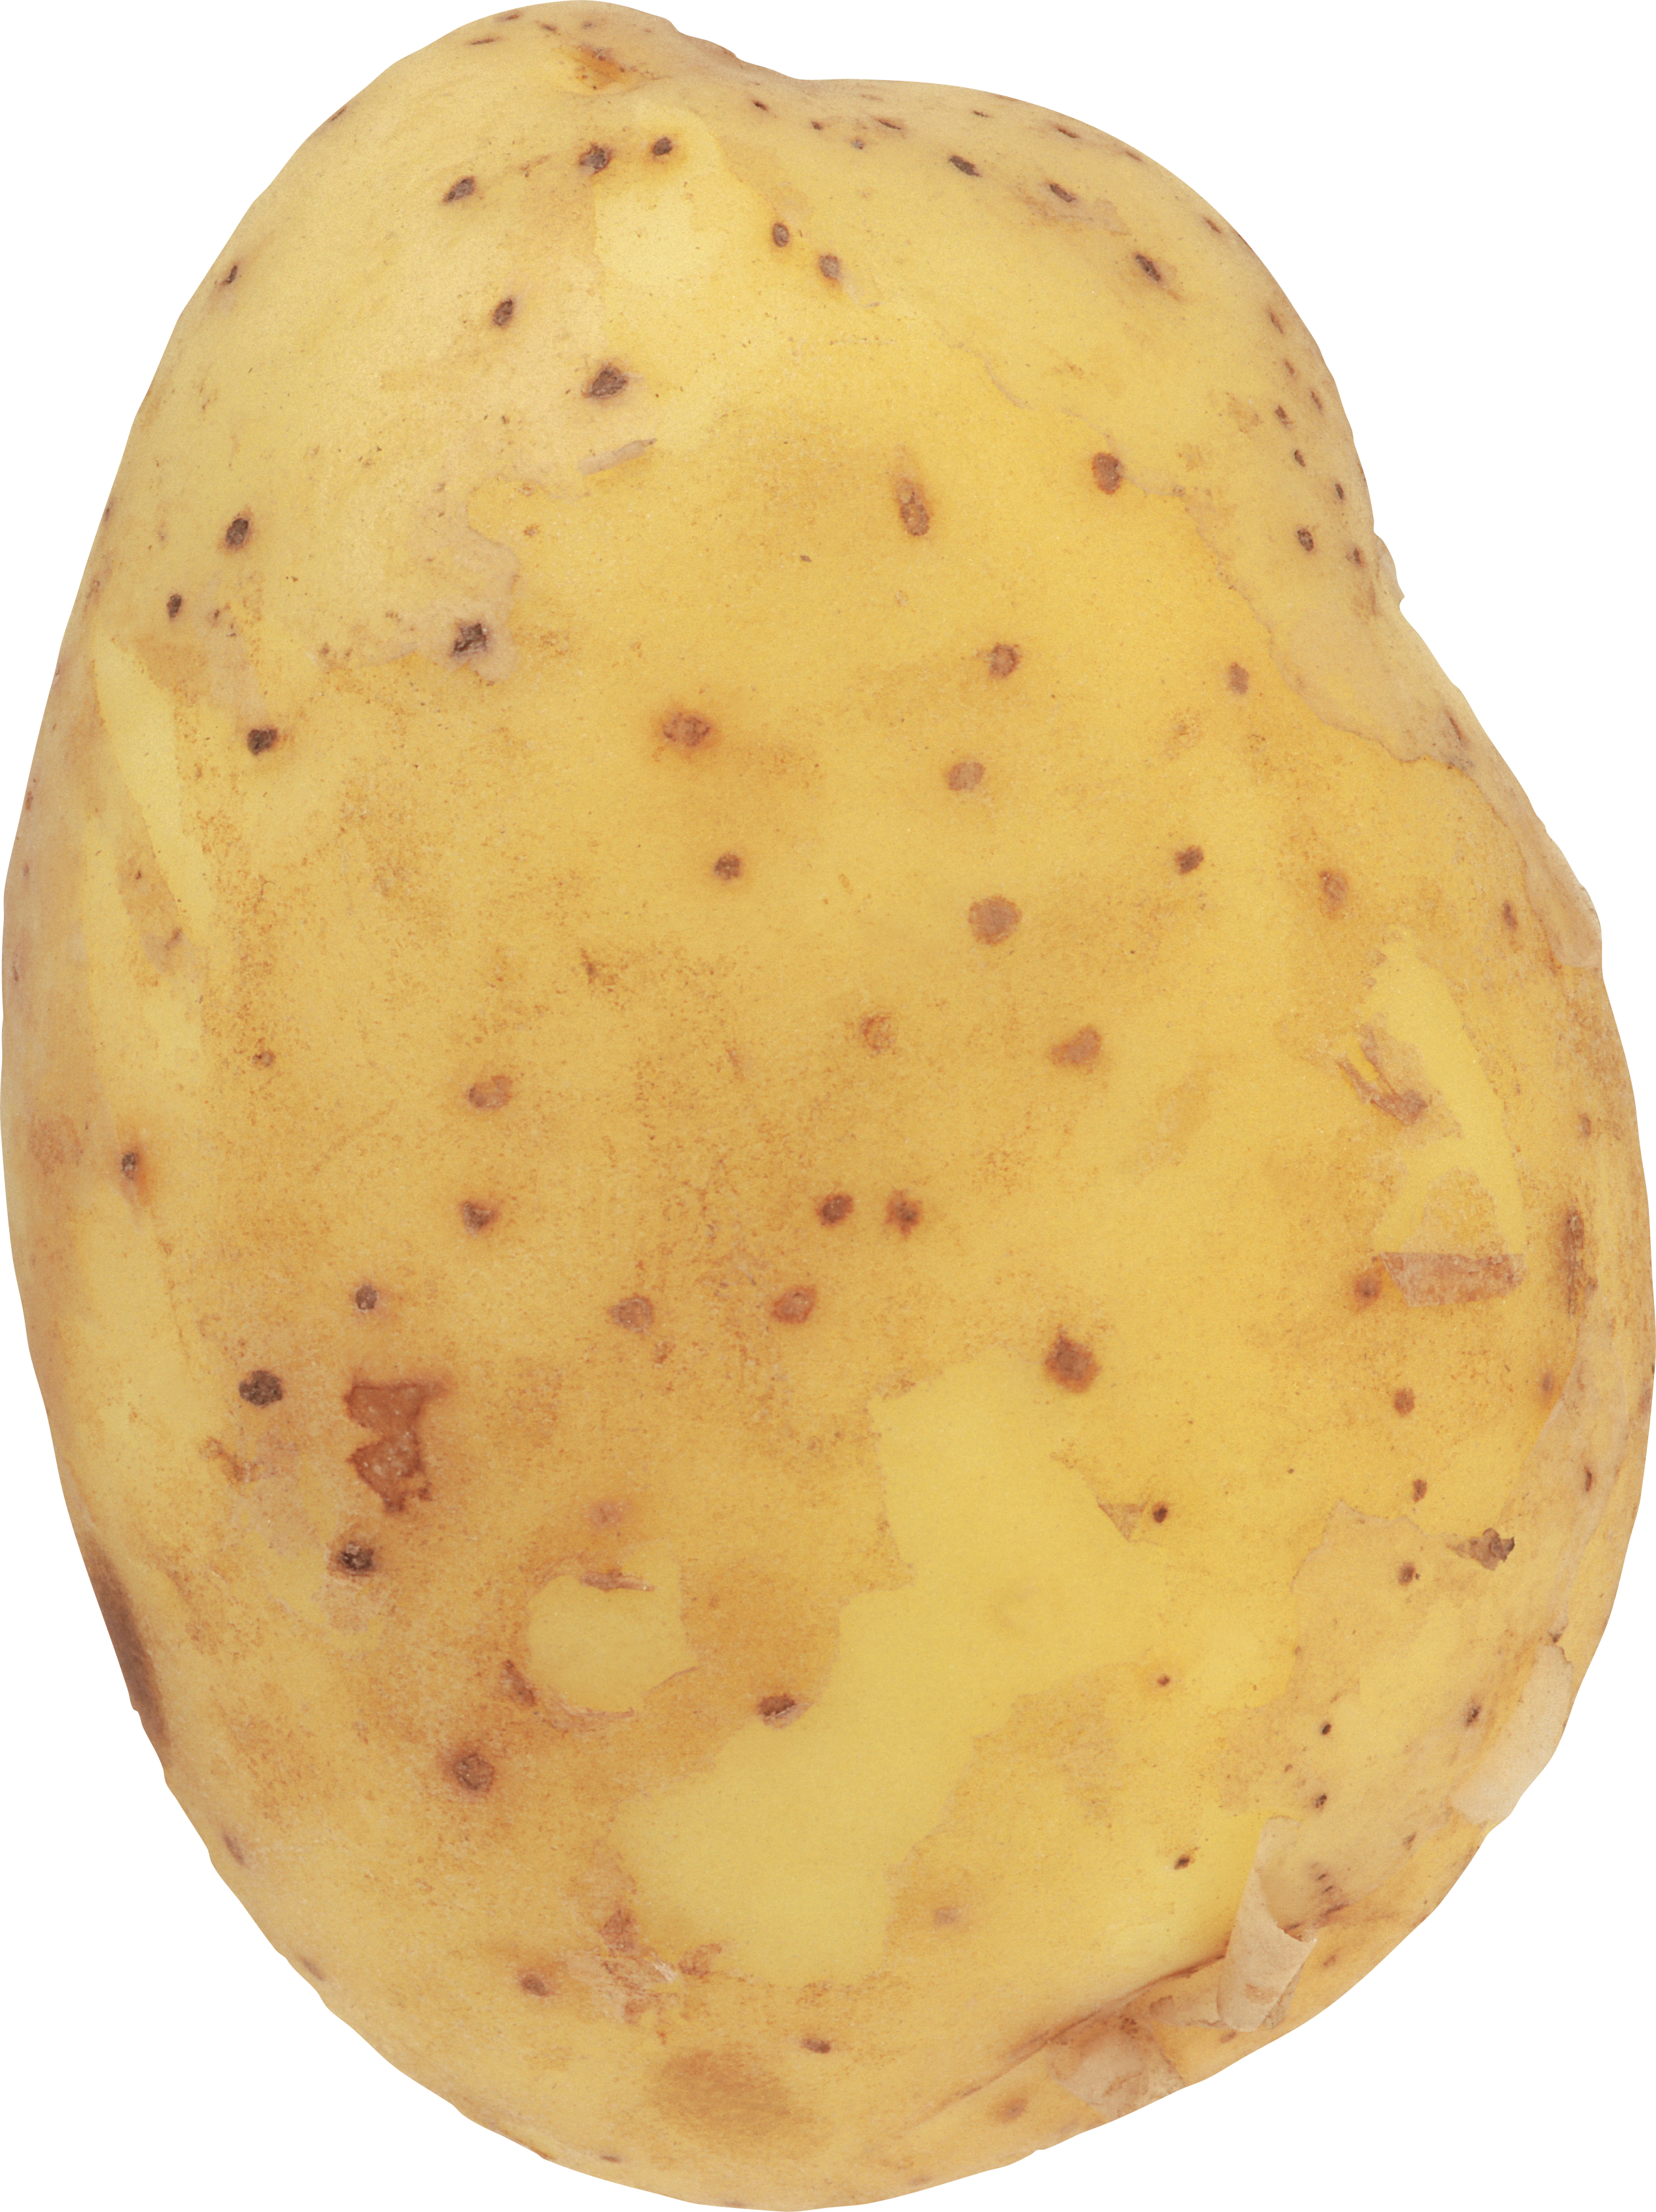 Raw Potato PNG image